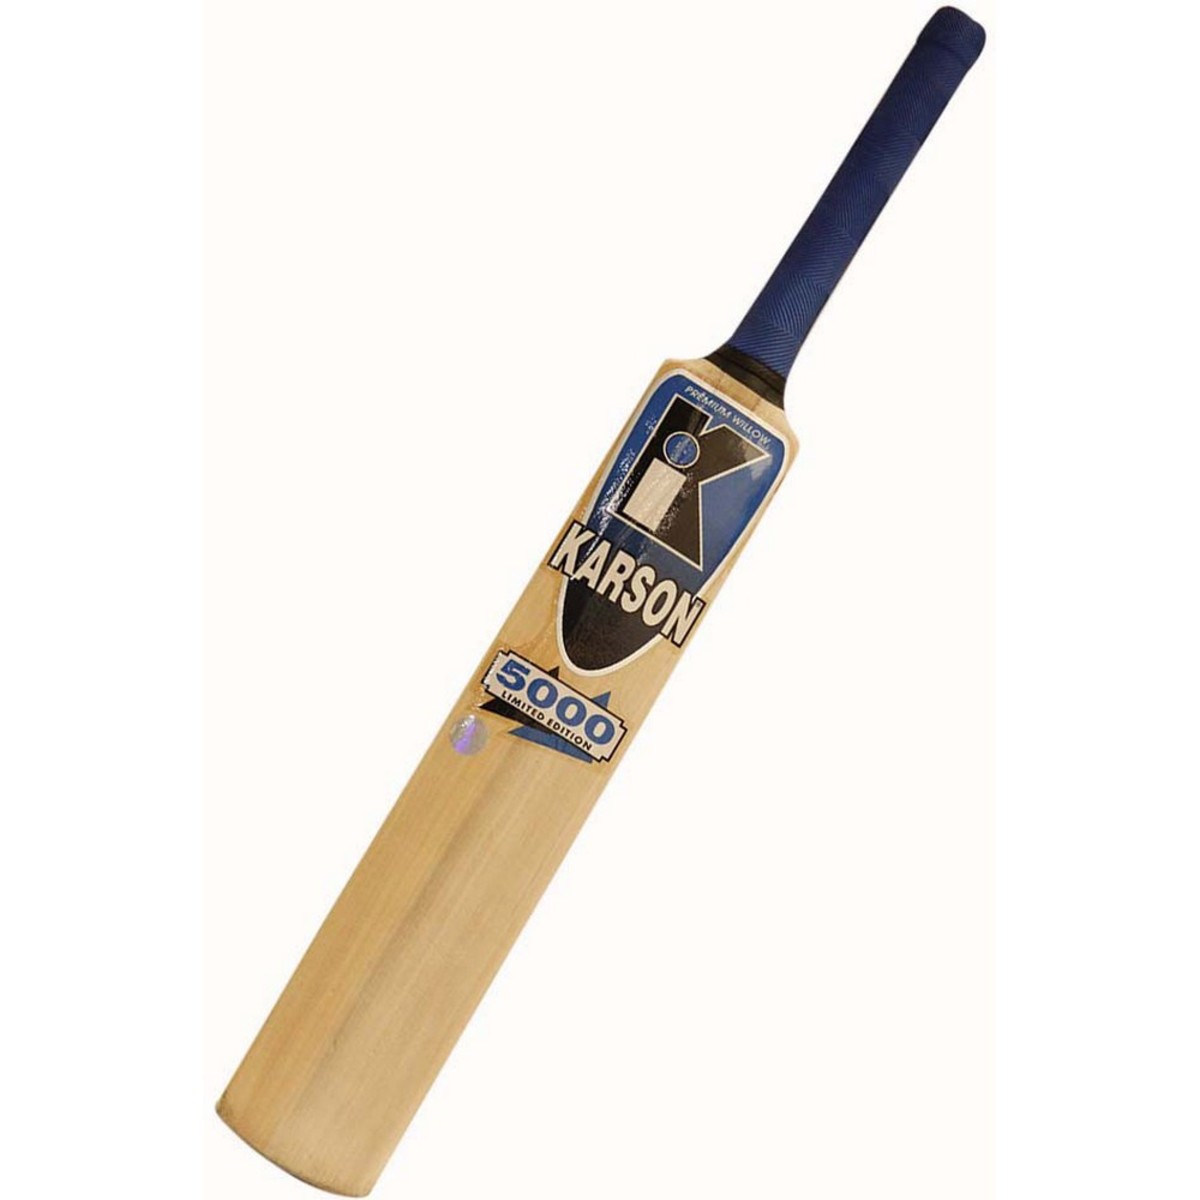 Karson Cricket Bat CB132